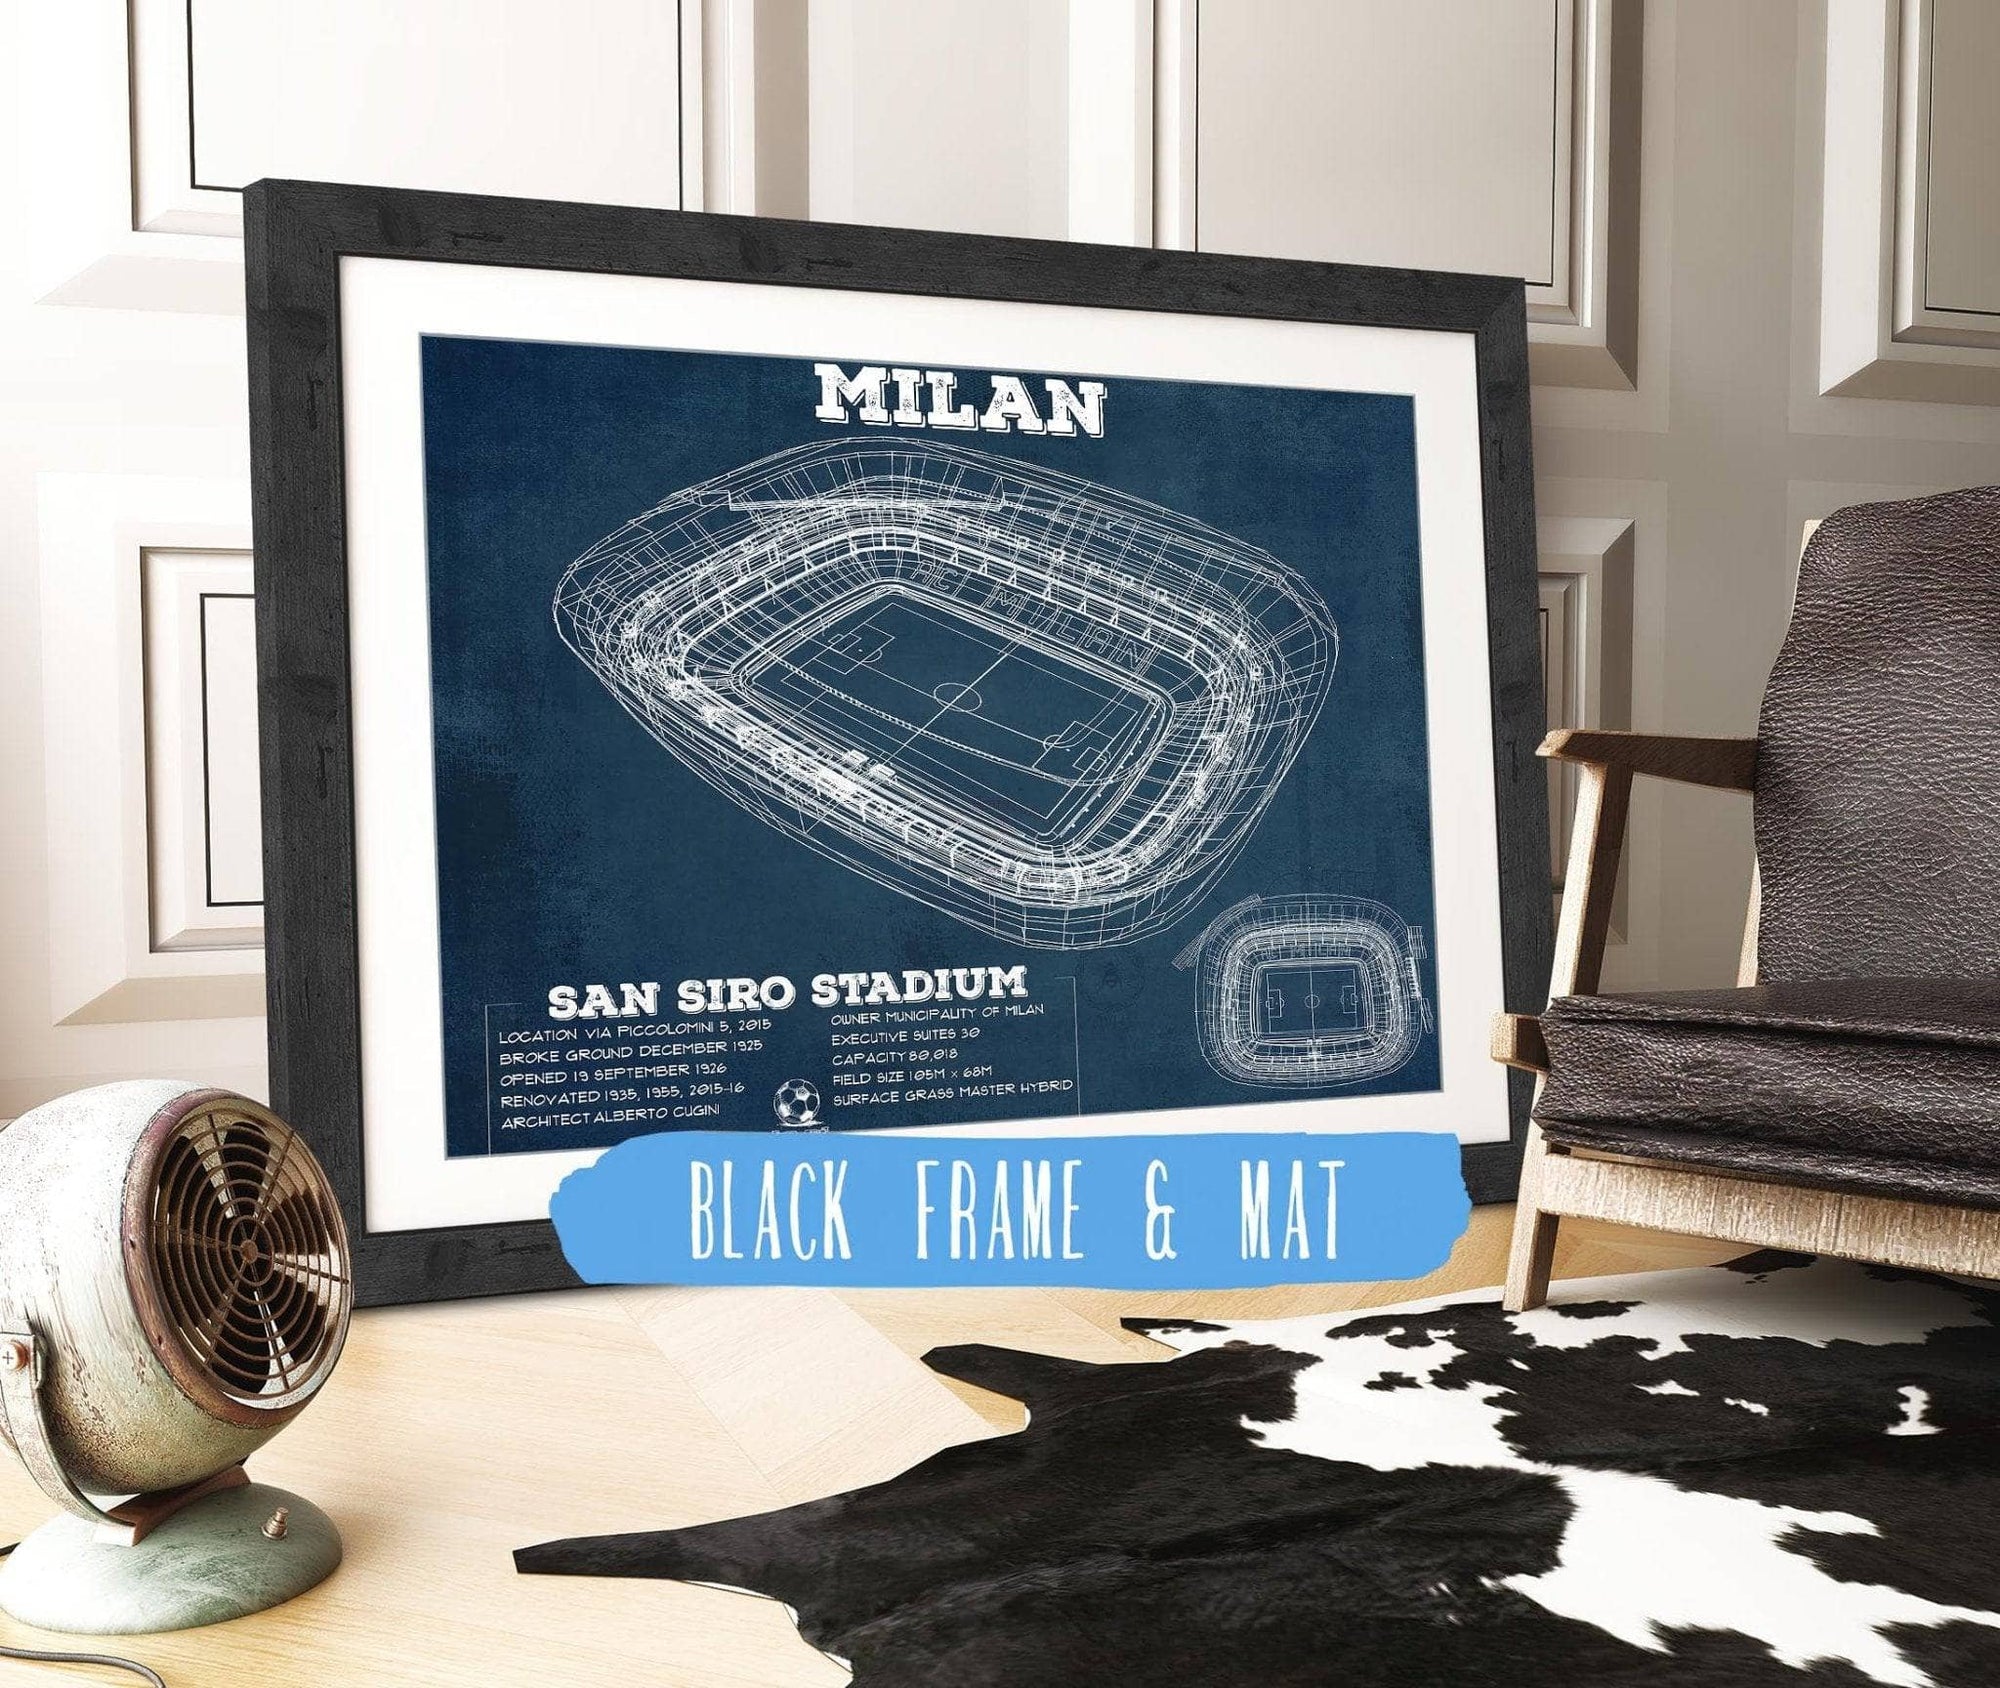 Cutler West Soccer Collection 14" x 11" / Black Frame & Mat AC Milan San Siro Stadium Soccer Print 735408000-TOP_39103